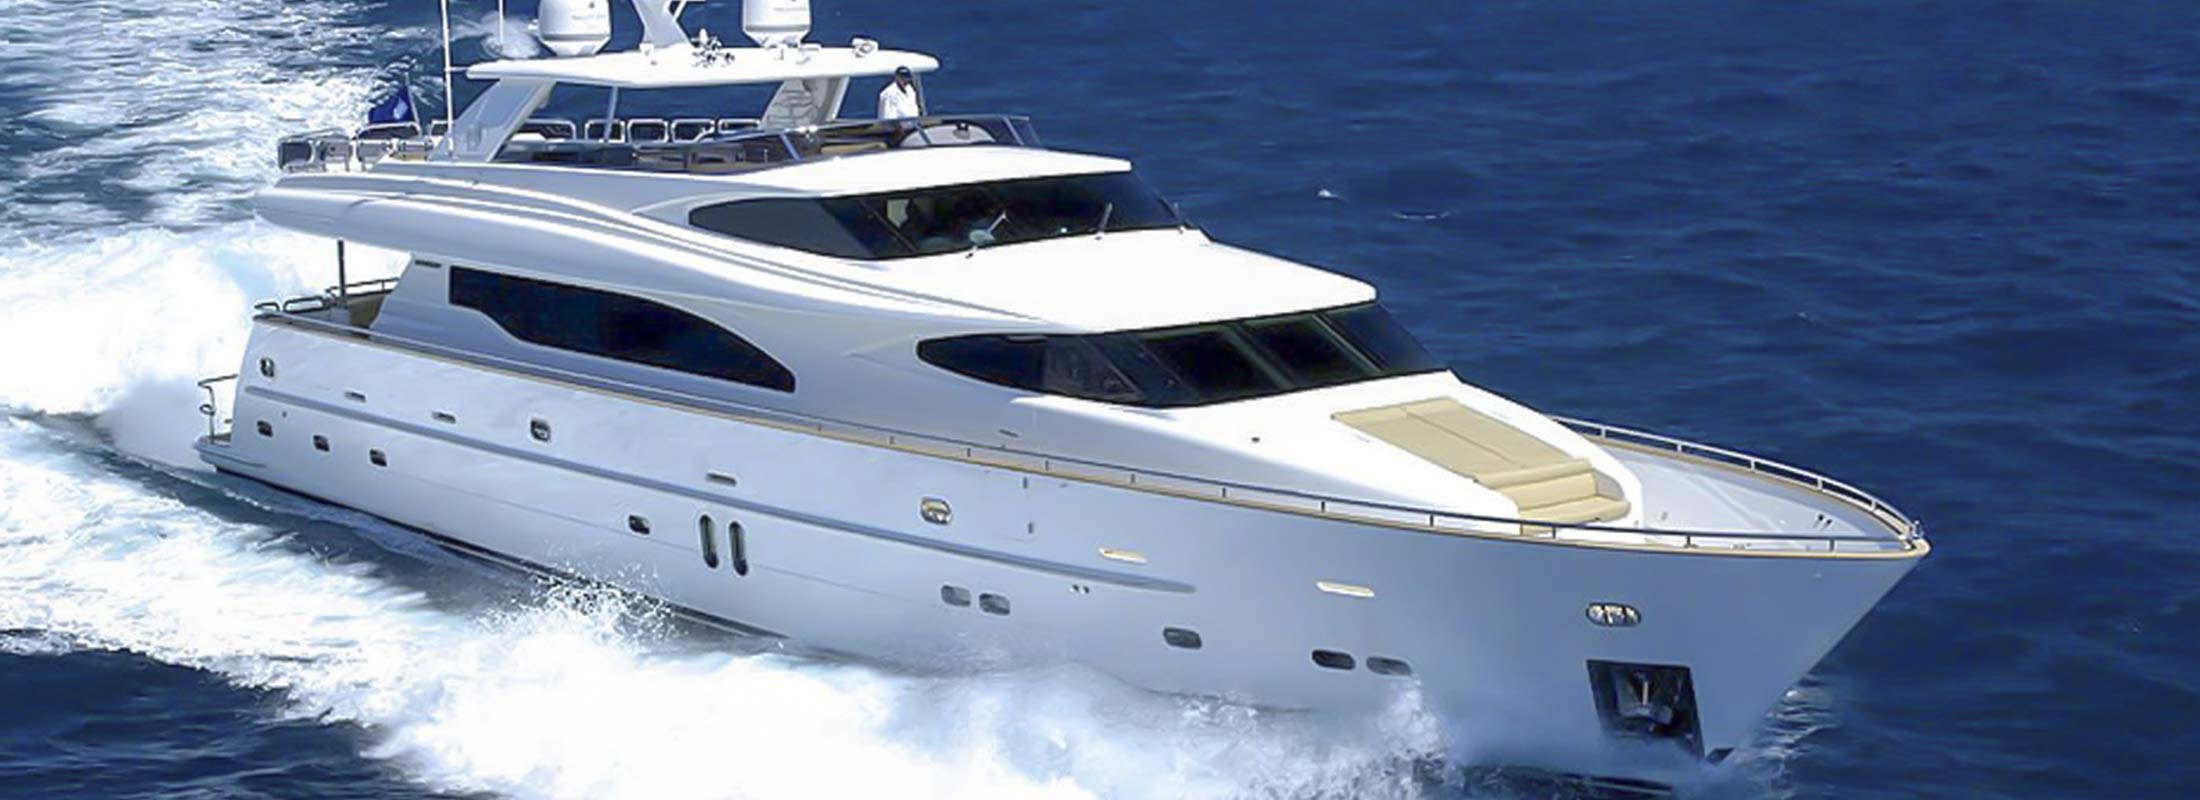 ANNABEL II Motor Yacht for Charter Mediterranean slider 1